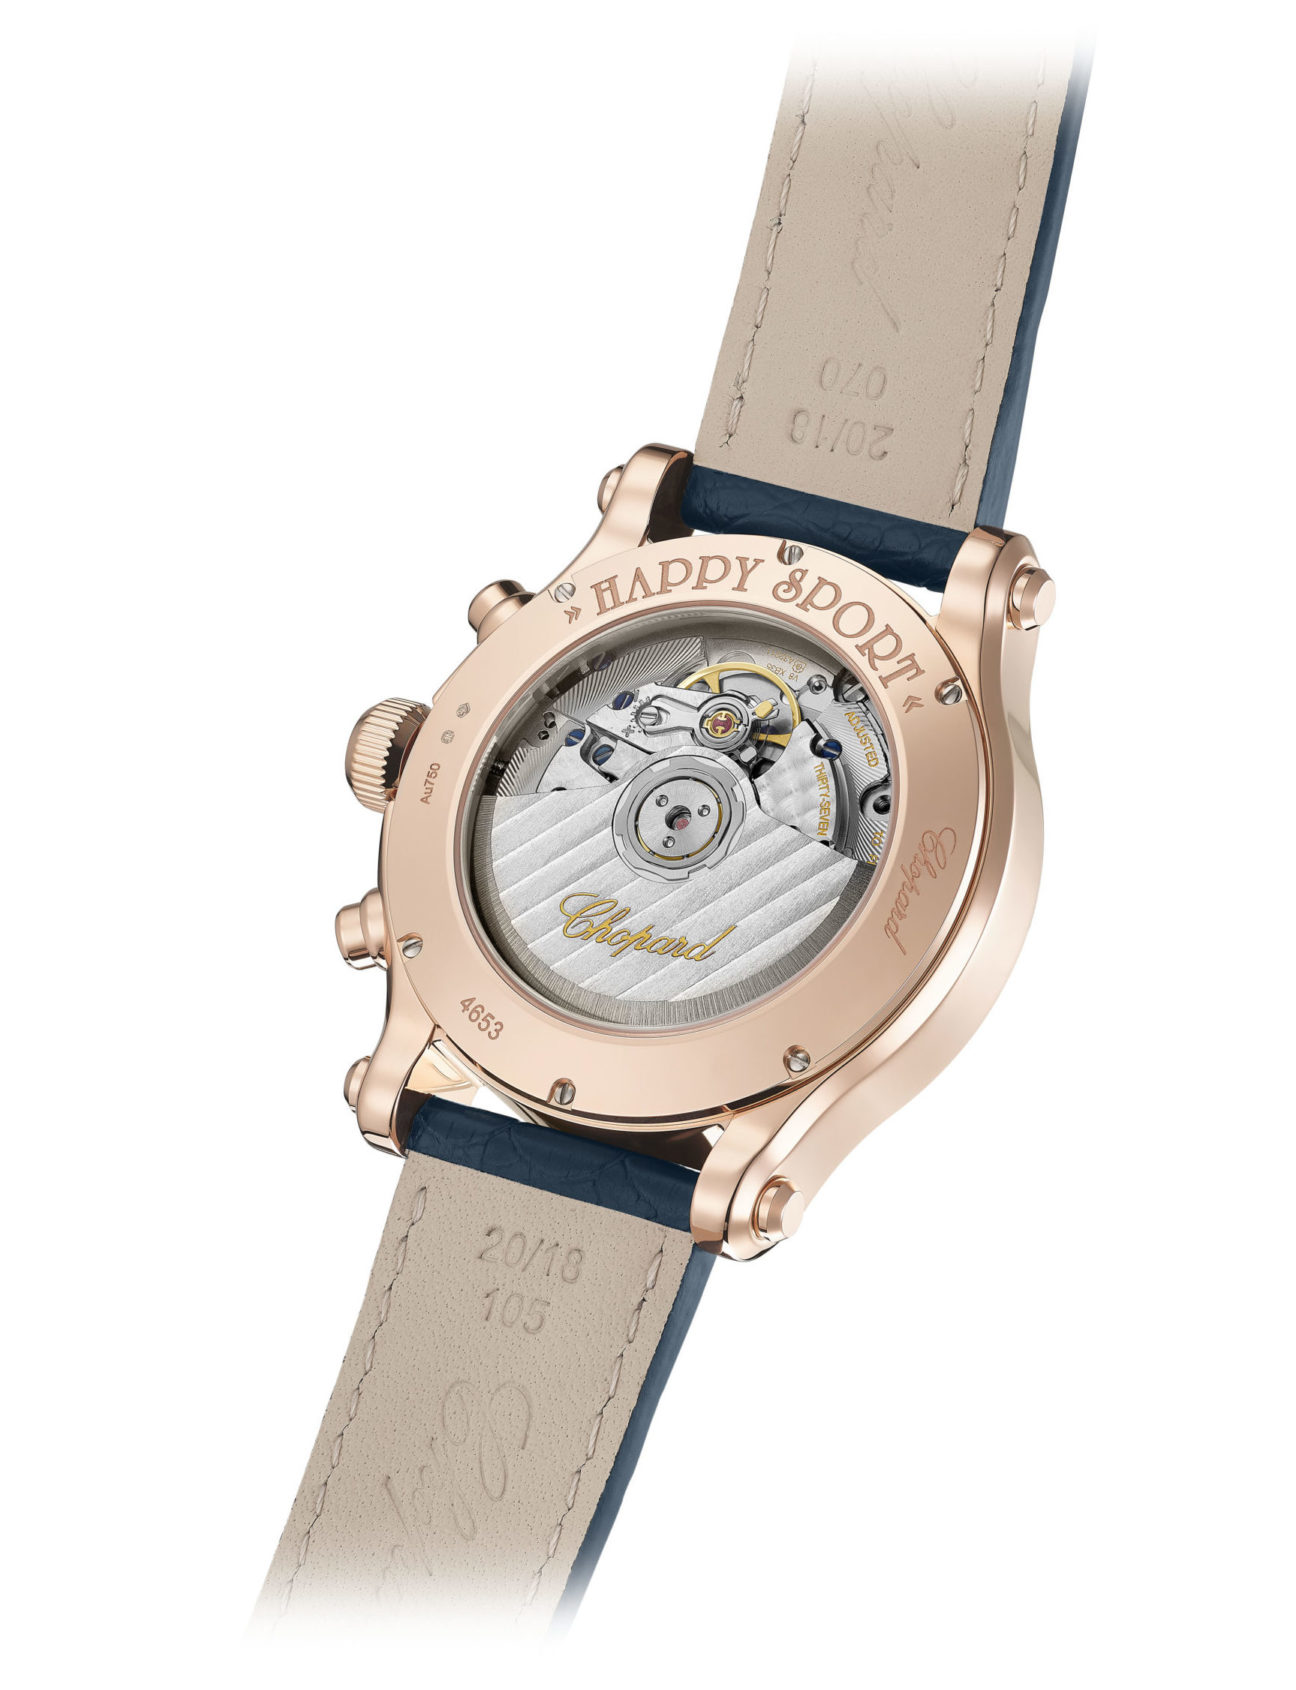 OZO Watch by Anton Repponen - Tuvie Design